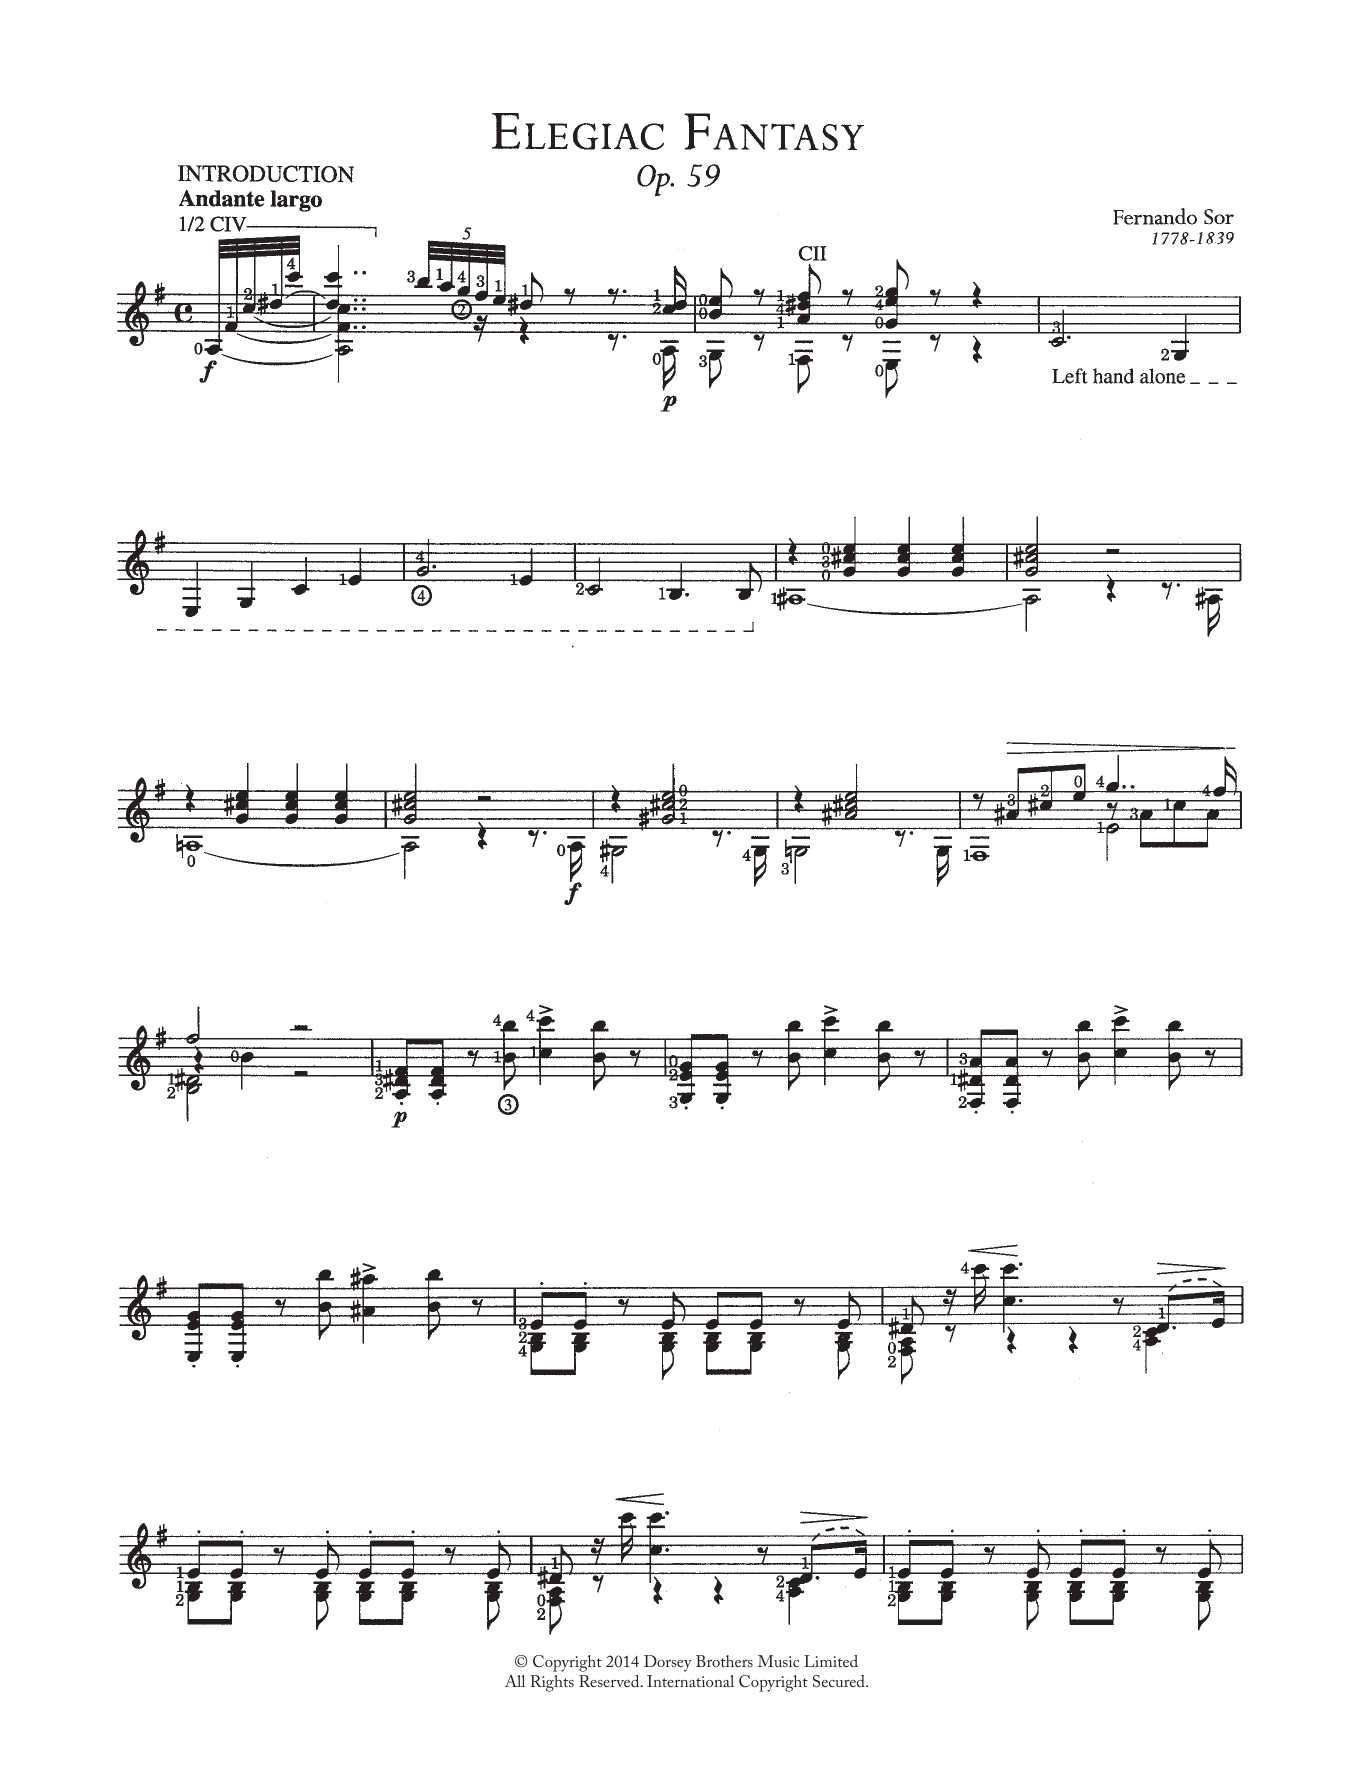 Fernando Sor Elegaic Fantasy, Op.59 Sheet Music Notes & Chords for Guitar - Download or Print PDF